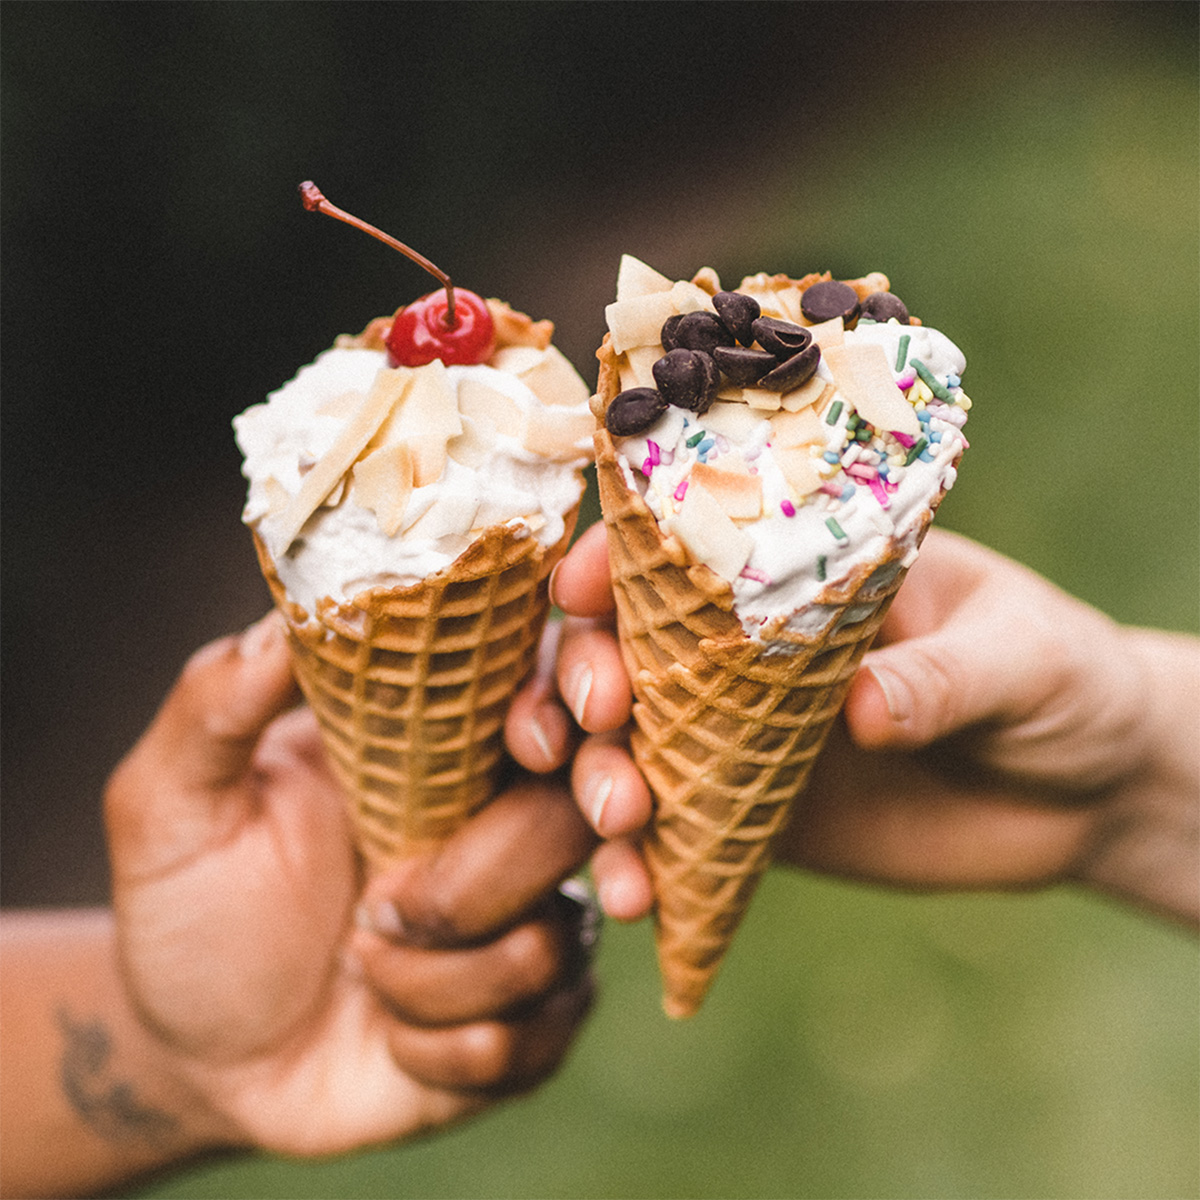 O’My ice cream cones